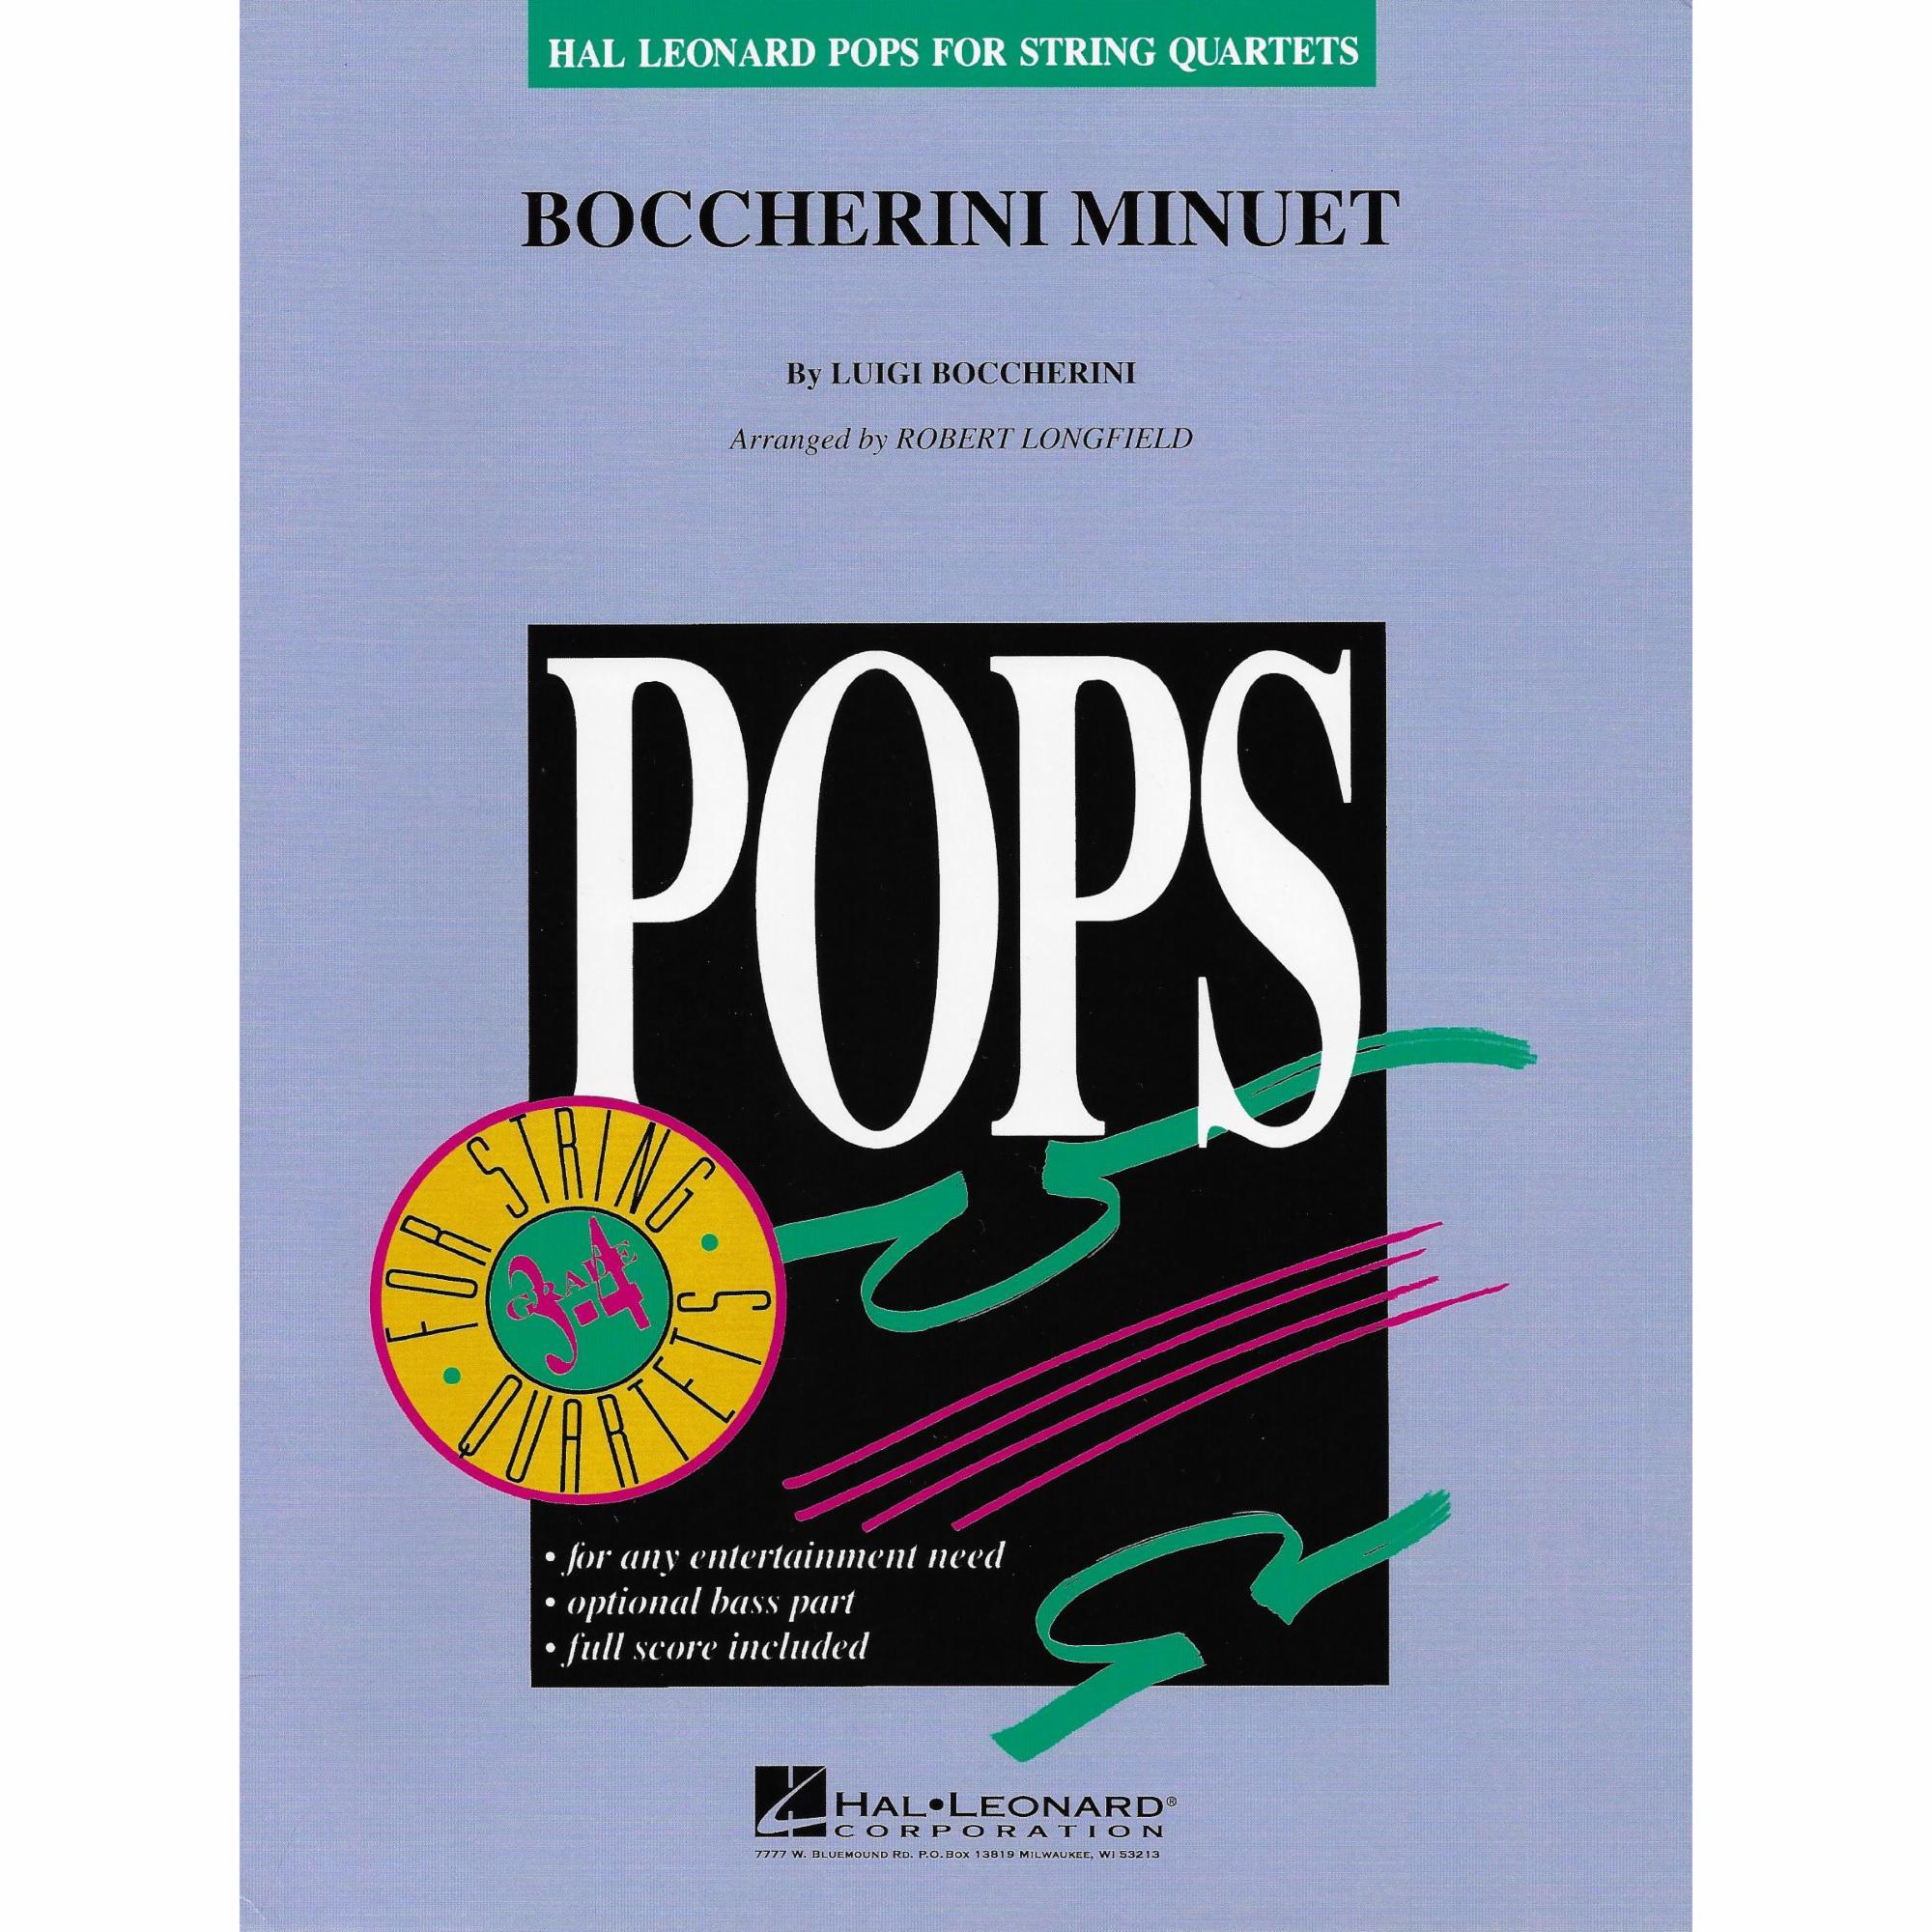 Boccherini Minuet for String Quartet